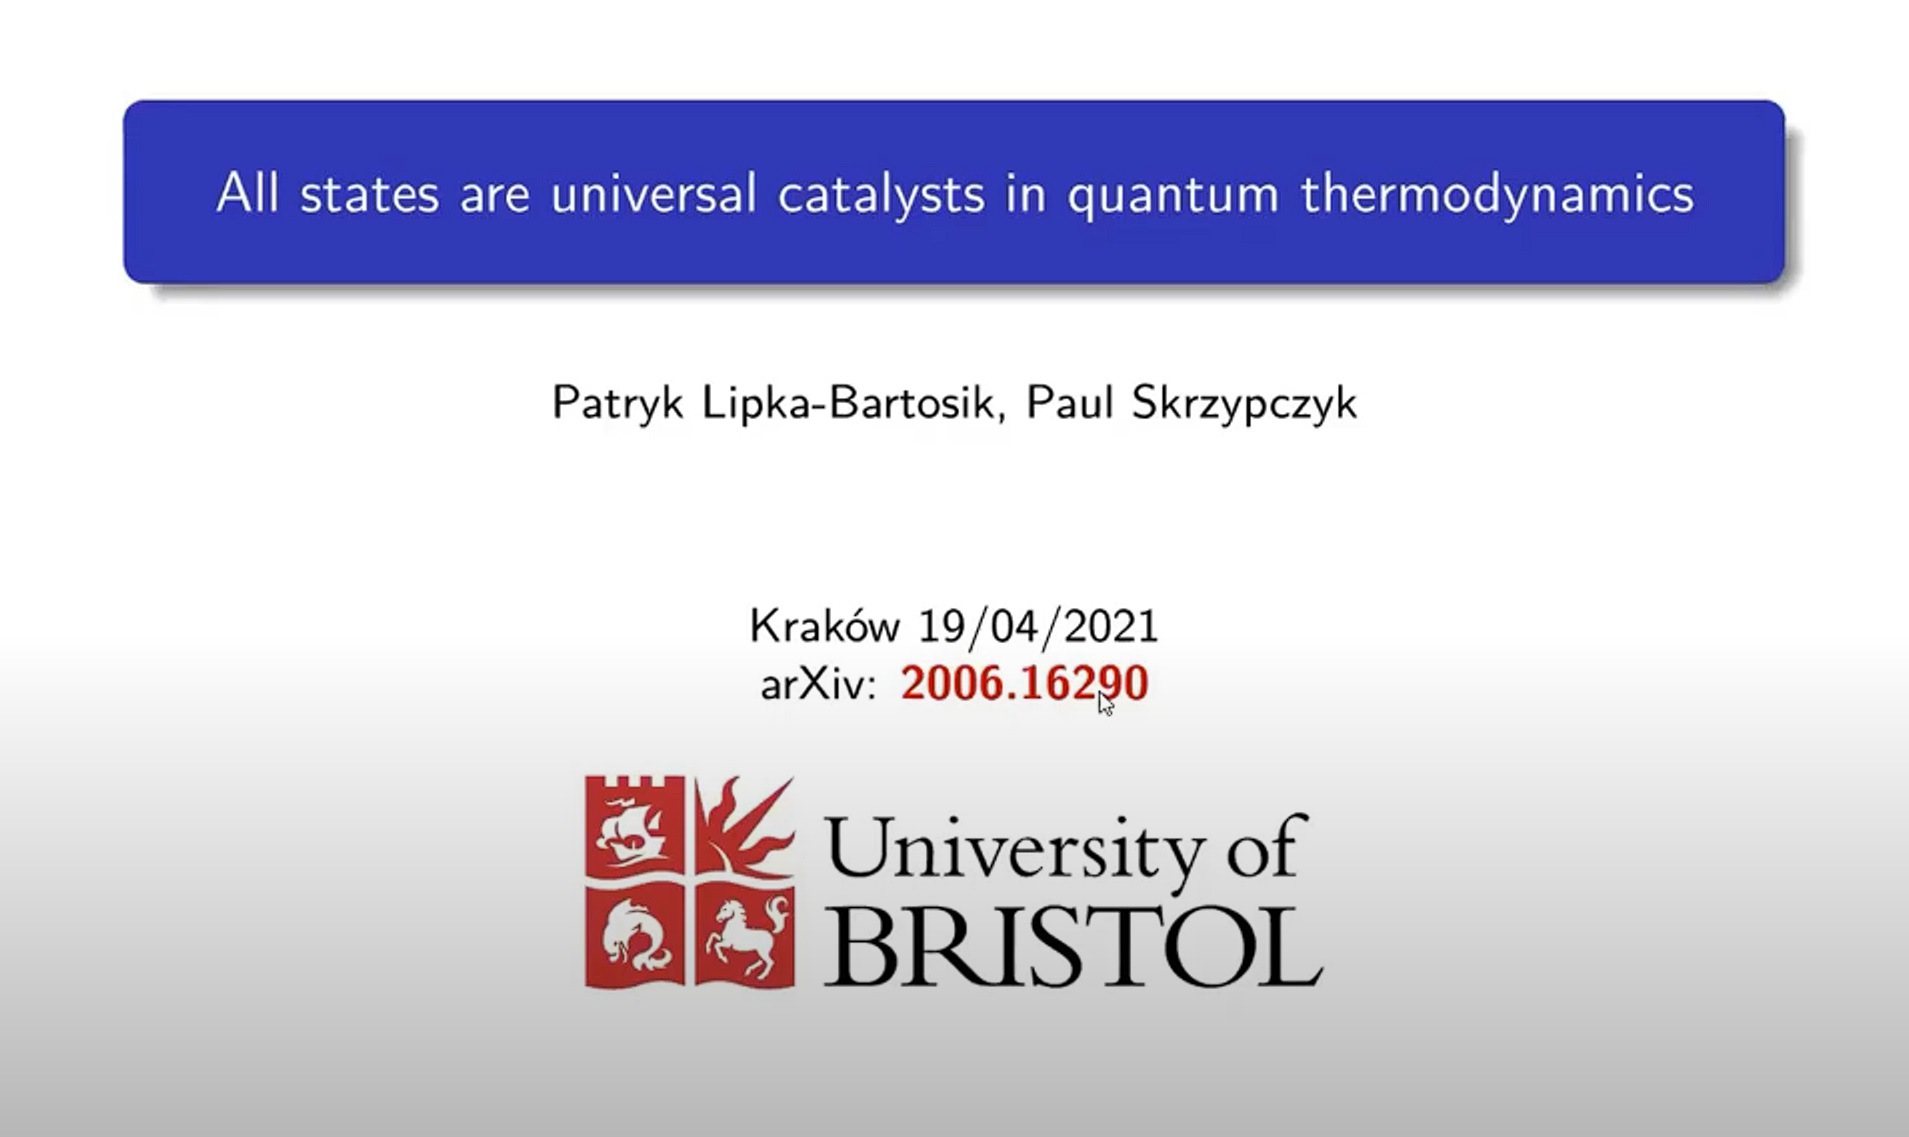 Patryk Lipka-Bartosik (University of Bristol): All states are universal catalysts in quantum thermodynamics